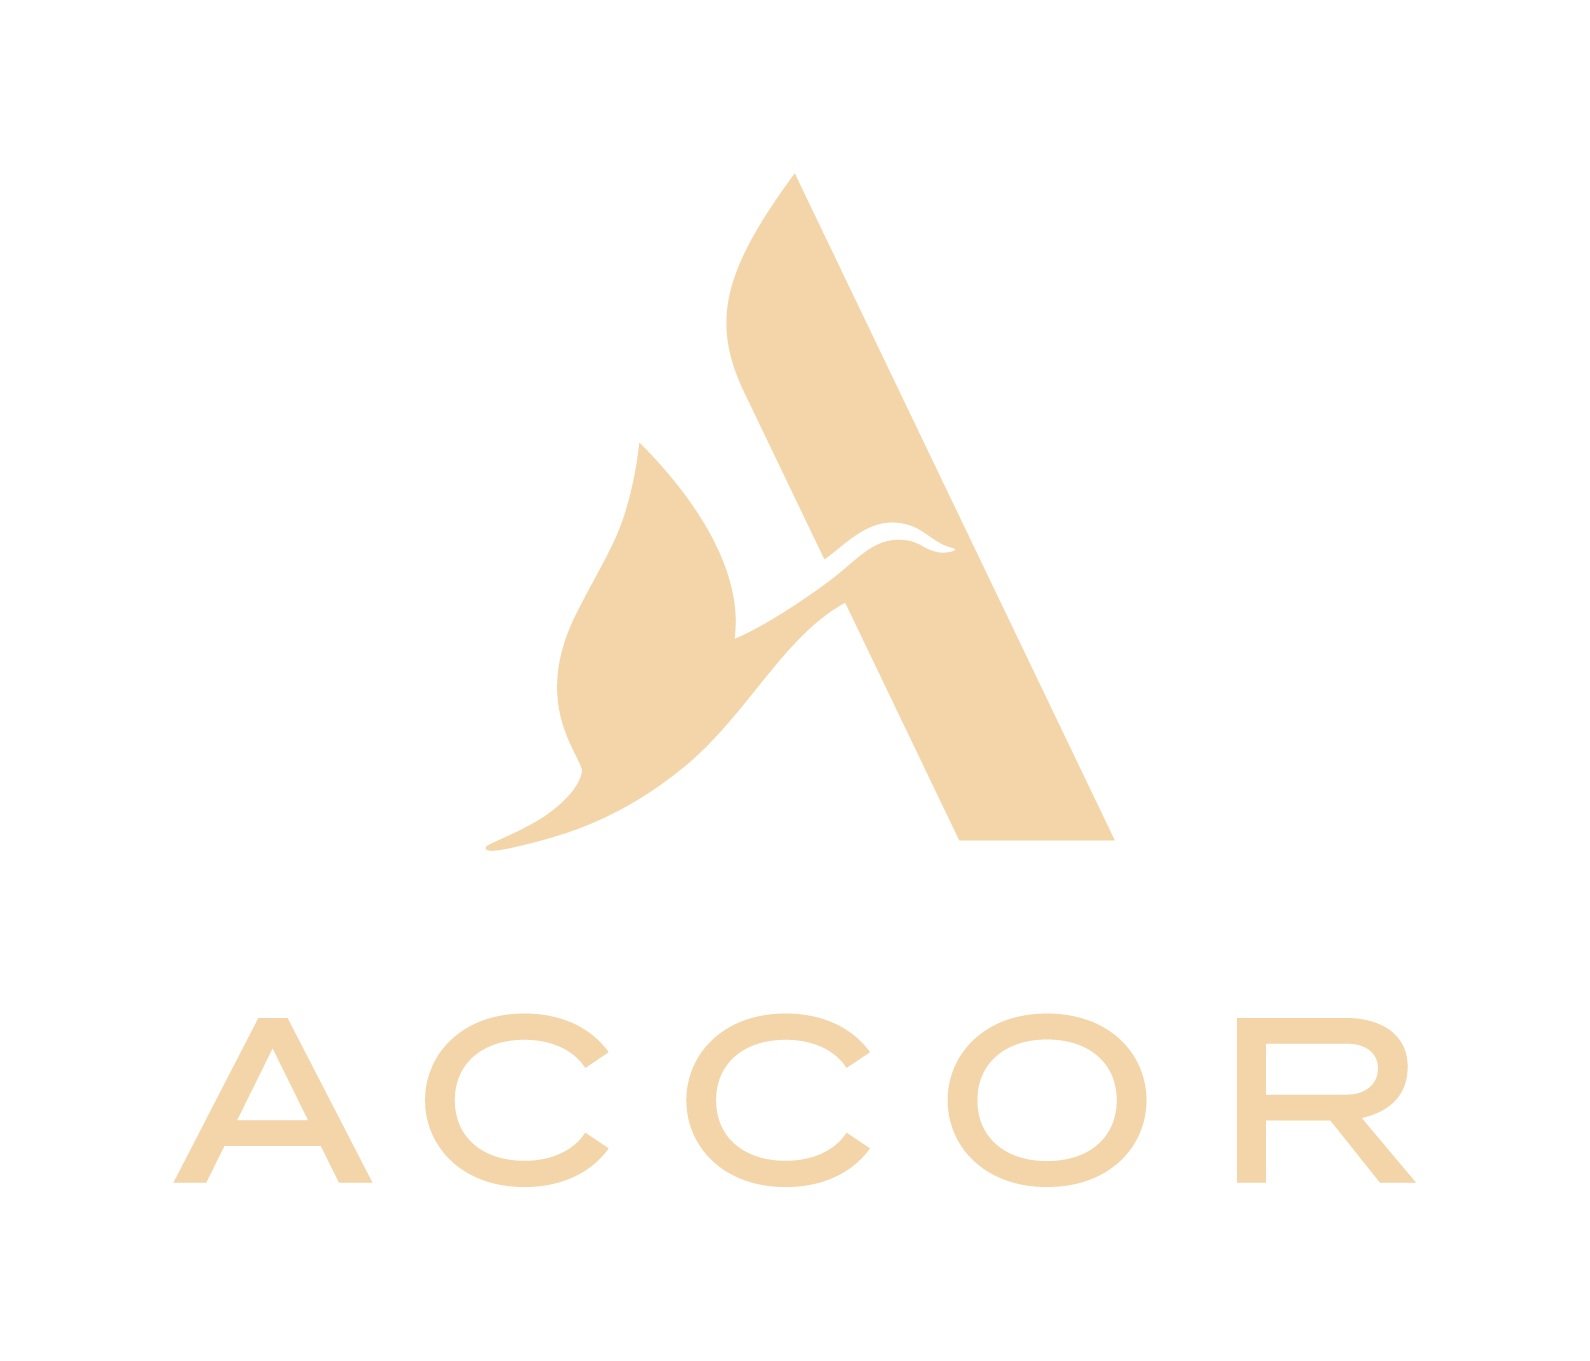 Accor_Logo.jpg